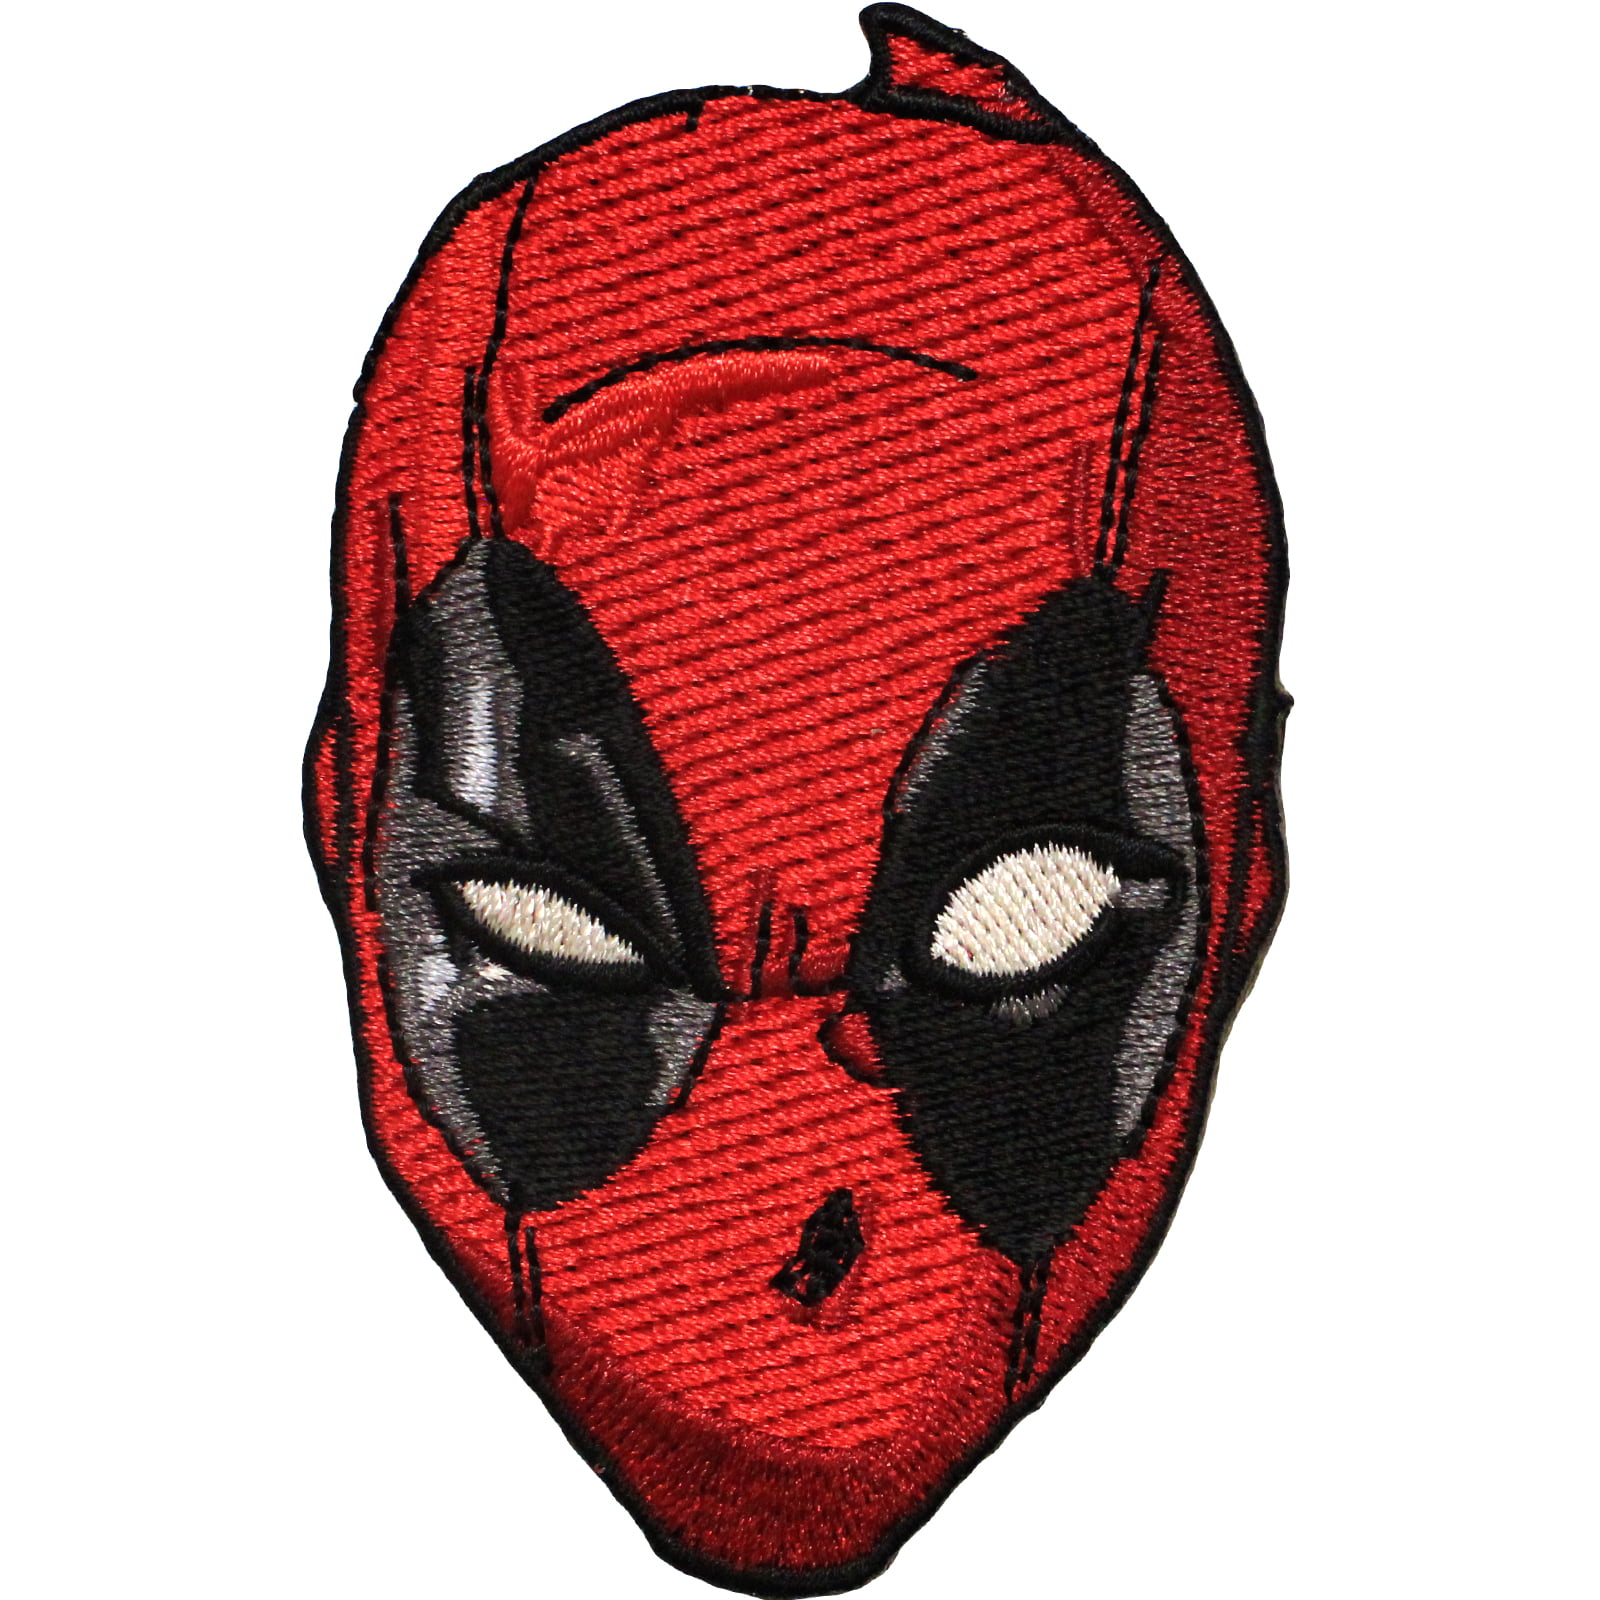 C&D Visionary Marvel Comics Patch-Spiderman Mask 